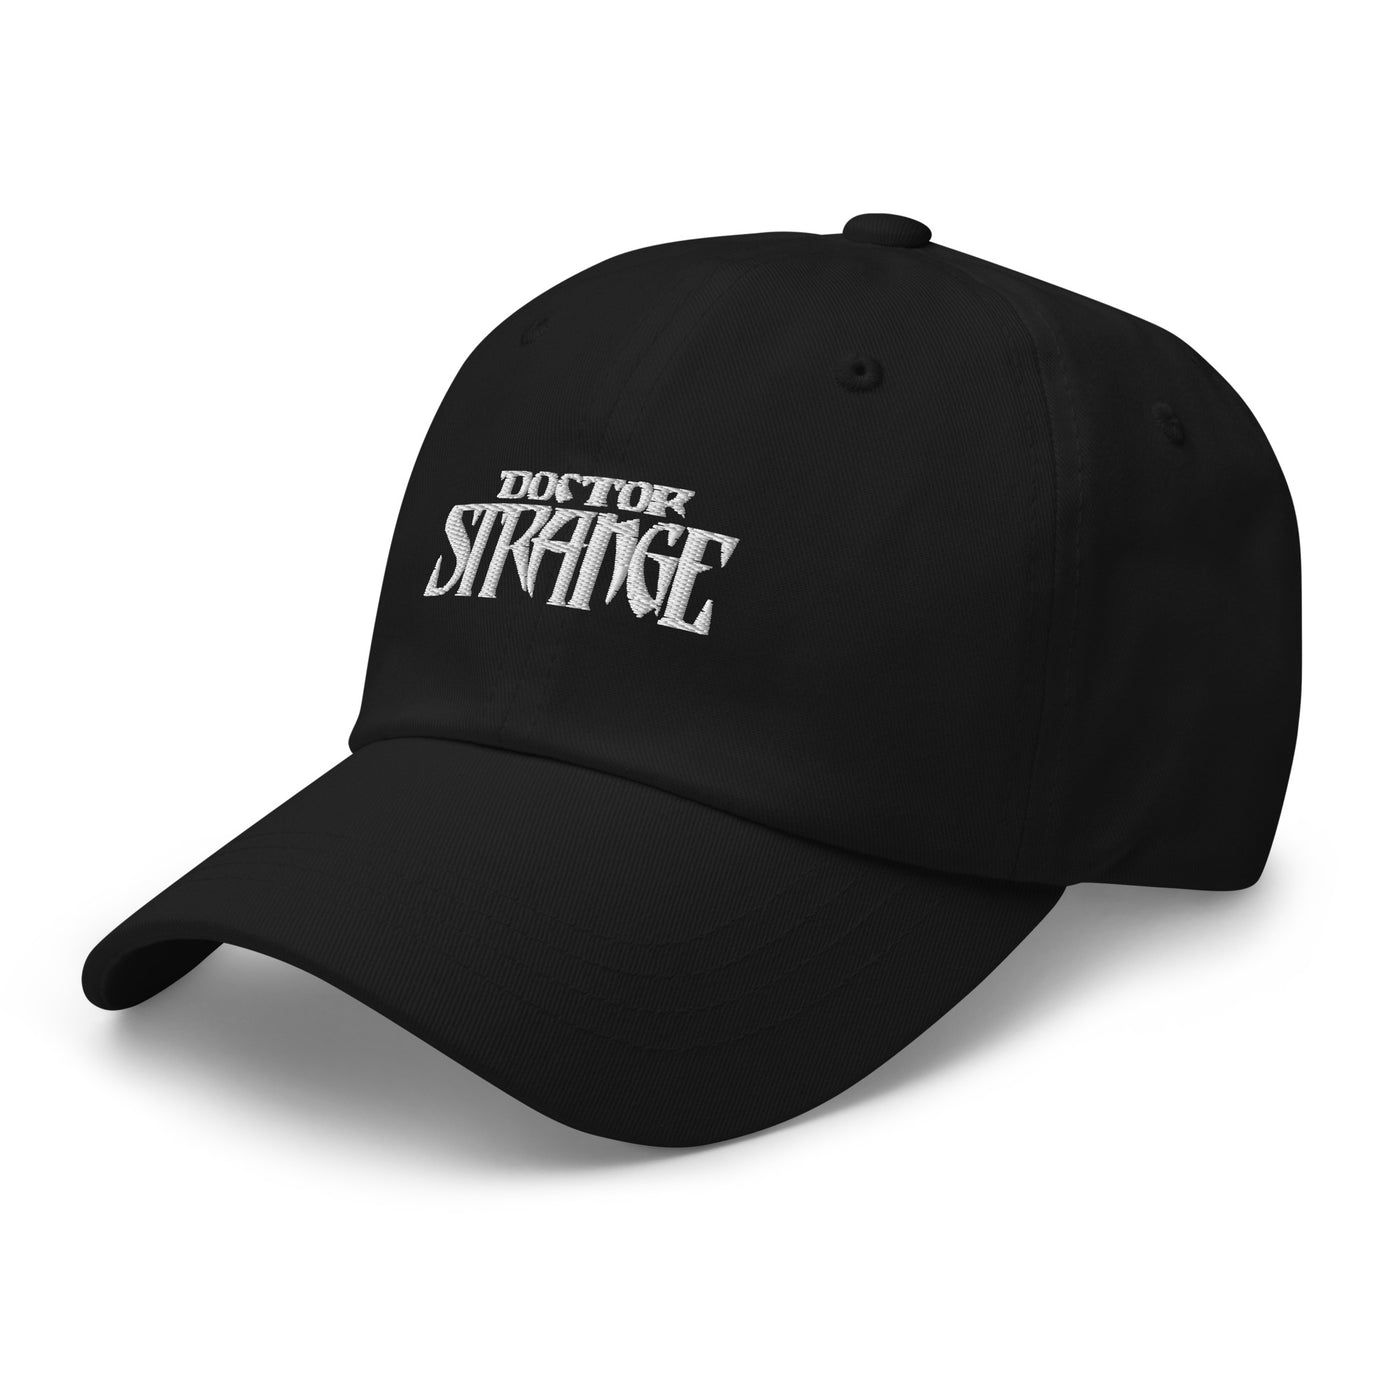 Doctor Strange Unisex Hat